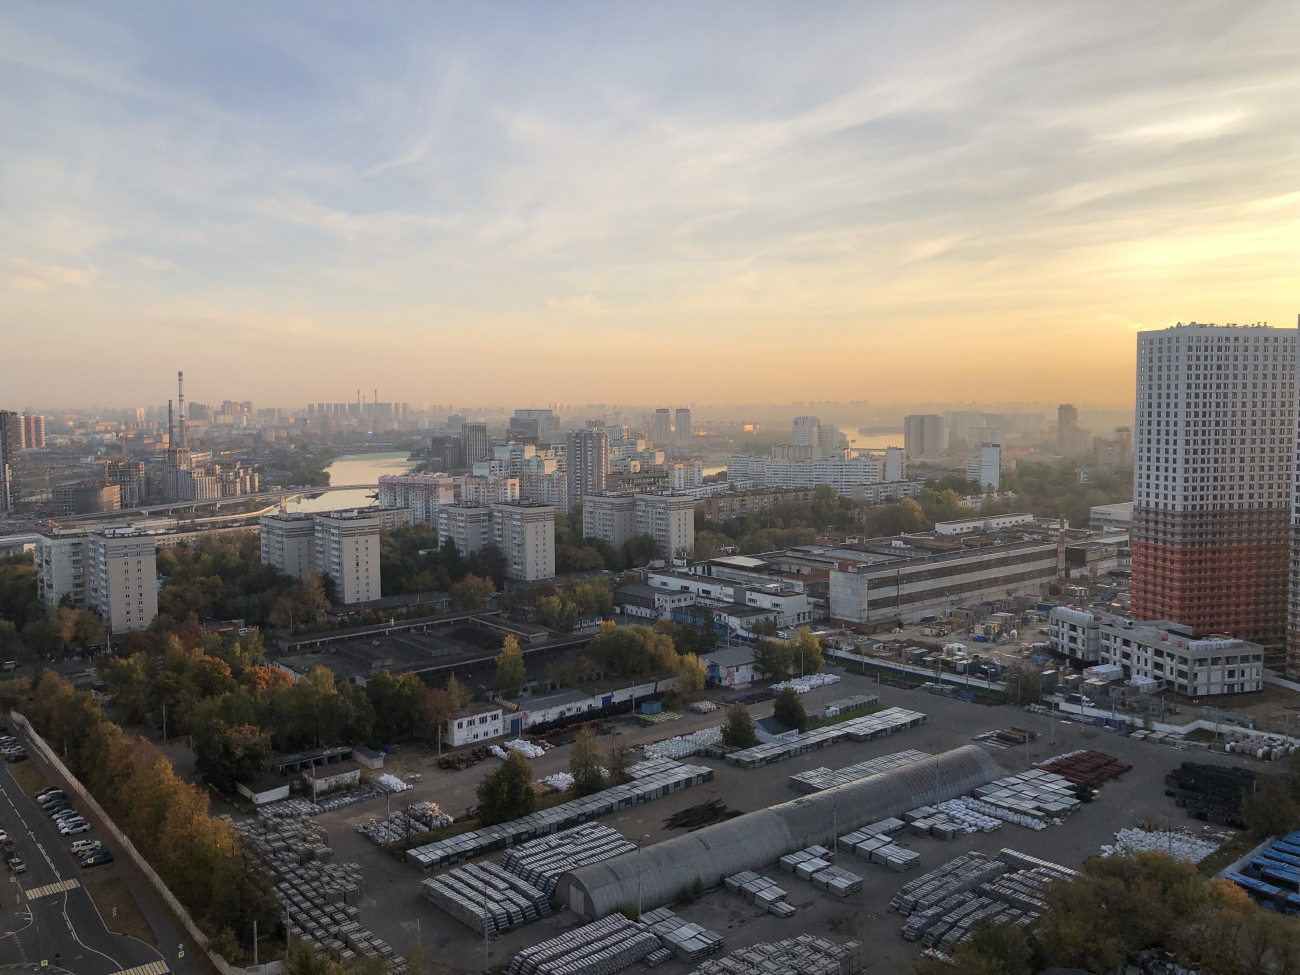 Moskau — Trolleybus depots: [7]; Moskau — Views from a height